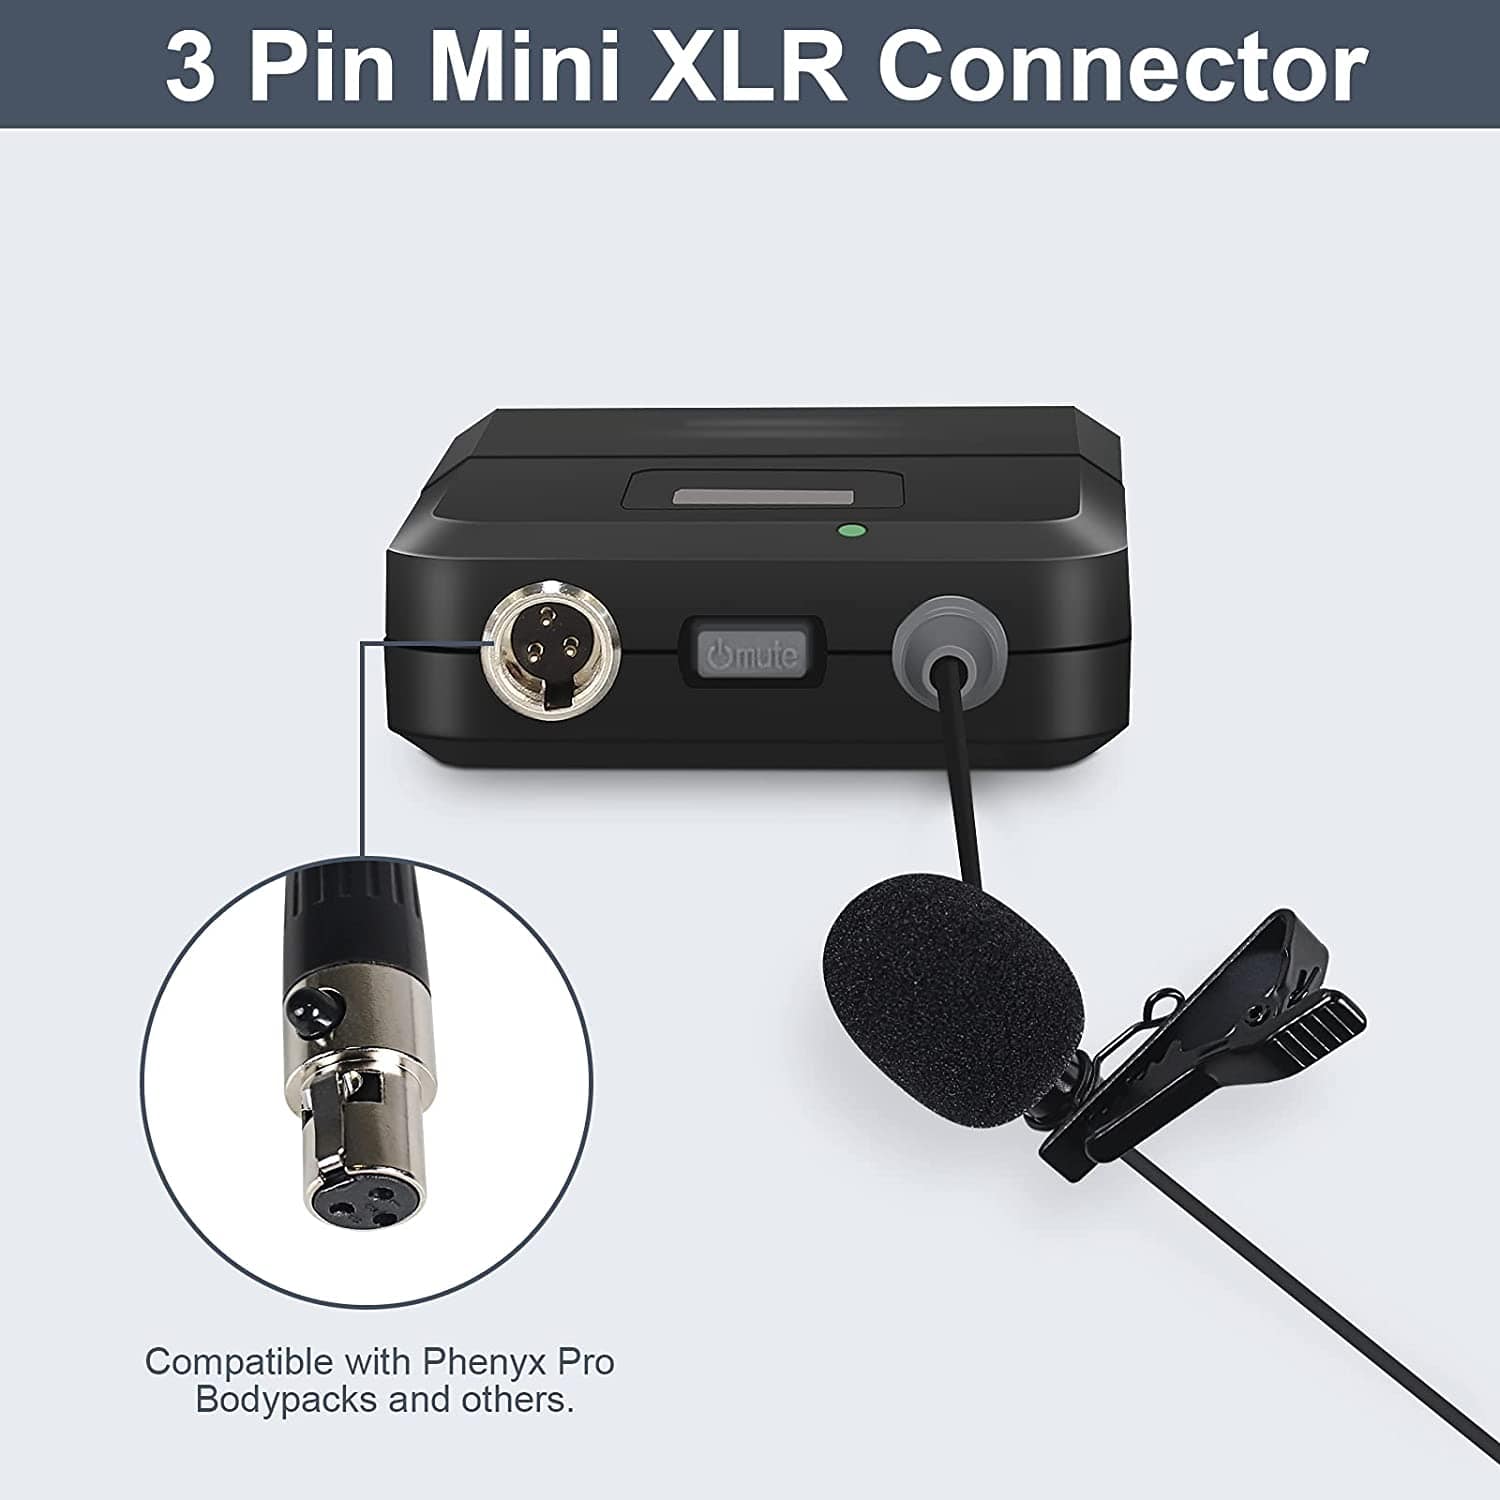 Phenyx Pro Lavalier Lapel/Headset Microphone Combo With 3 Pin Mini XLR Jack (Black)